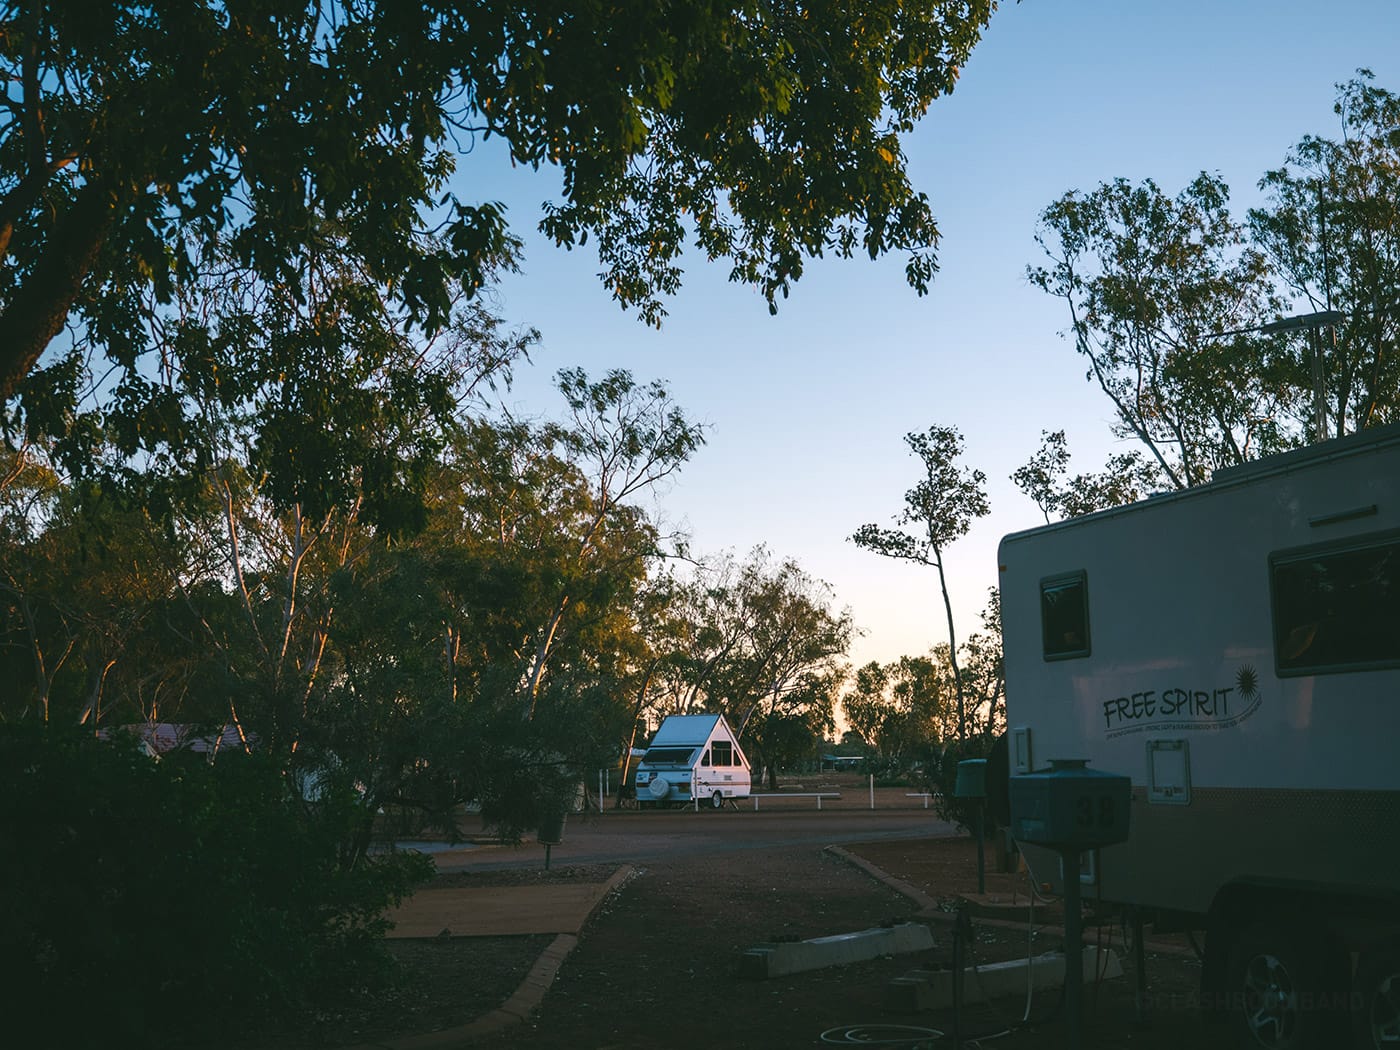 NT Australia - Tennant Creek - Triangle campervan